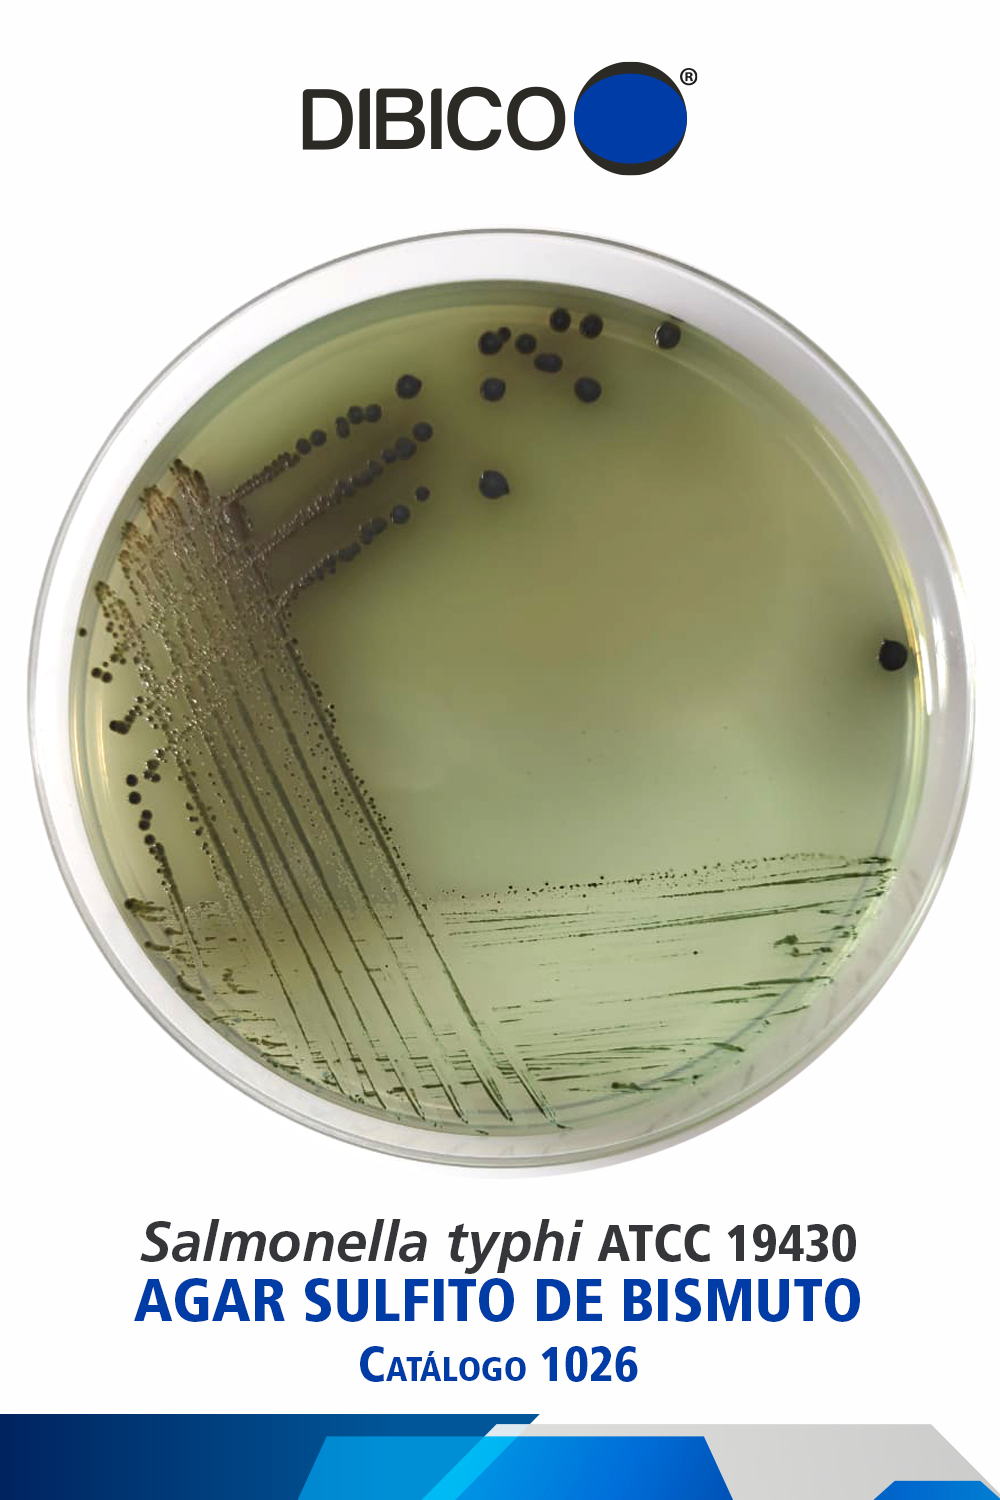 4 Salmonella typhi ATCC 19430